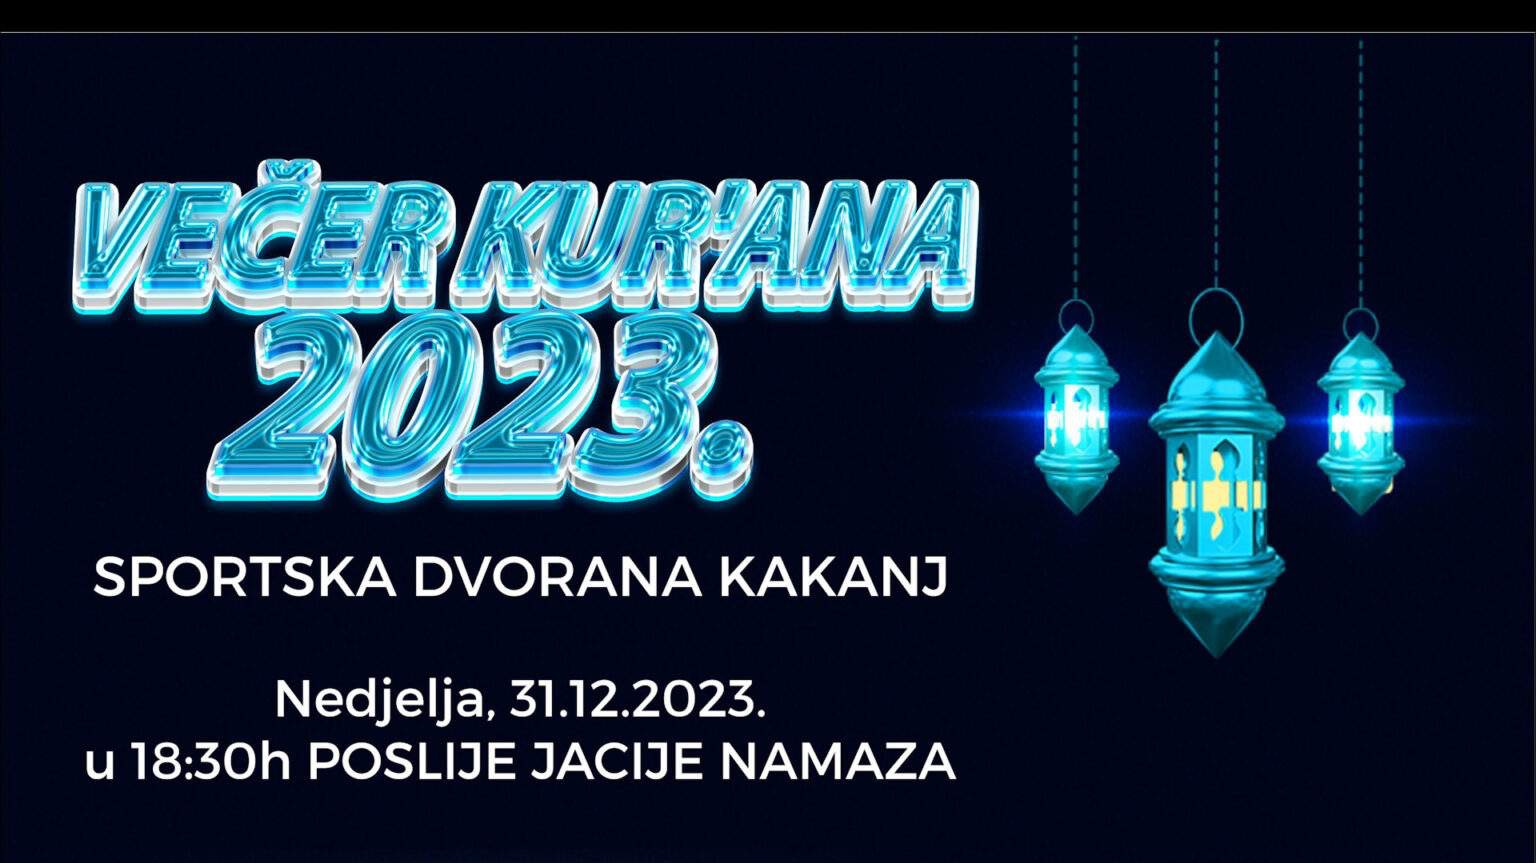 Medžlis Kakanj večeras organizira 24. "Večer Kur’an"